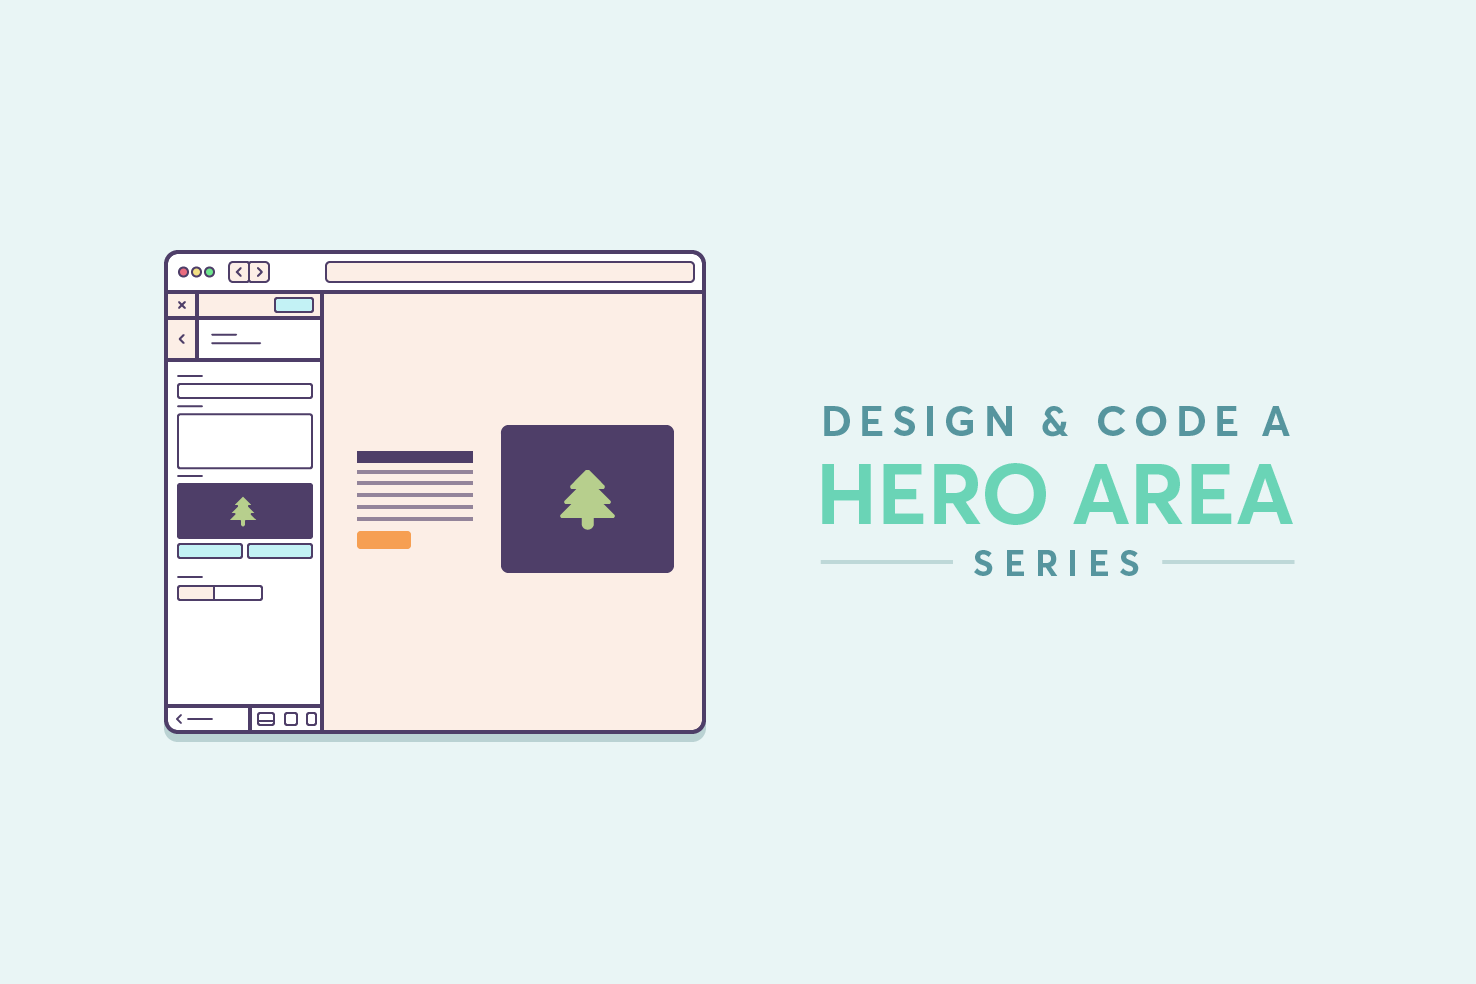 Hero area series: HTML, CSS & responsive